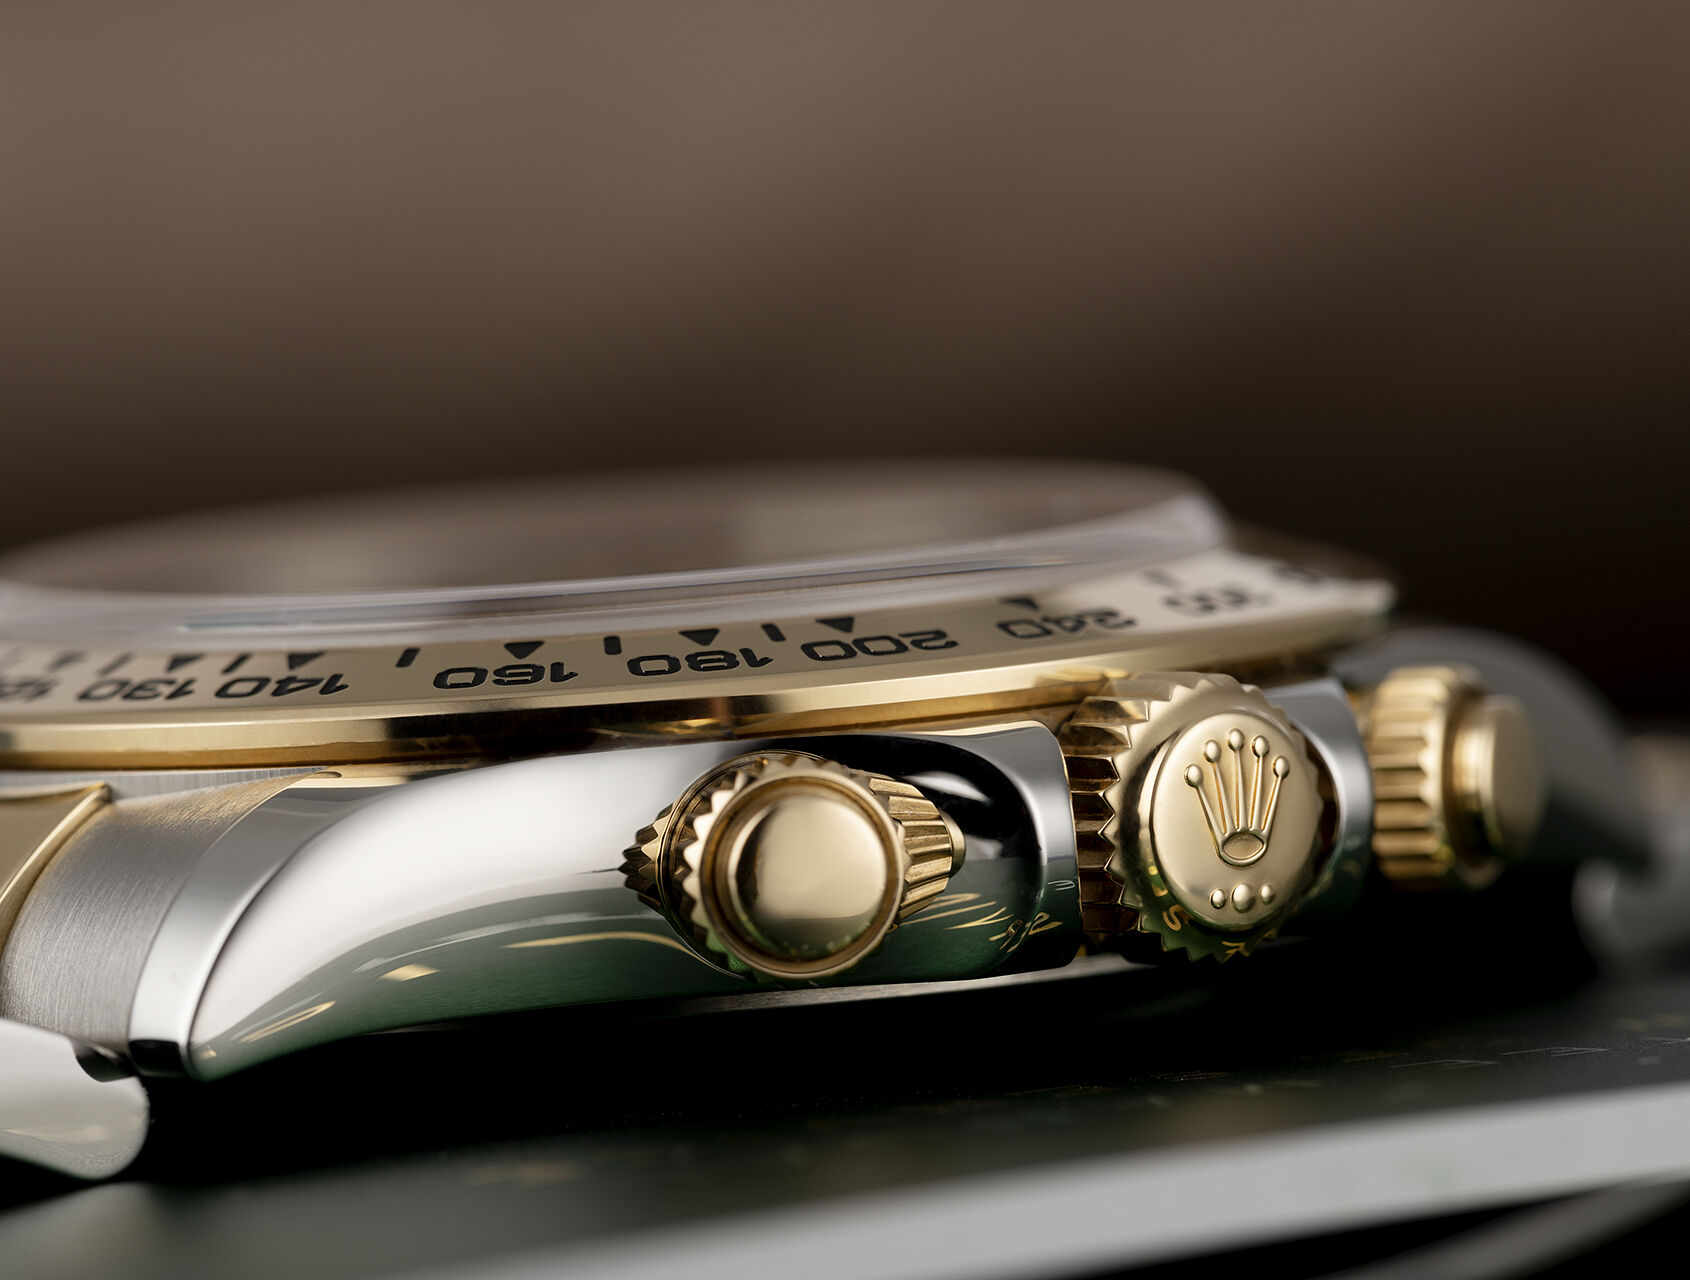 ref 116503 | UK Retailed | Rolex Cosmograph Daytona